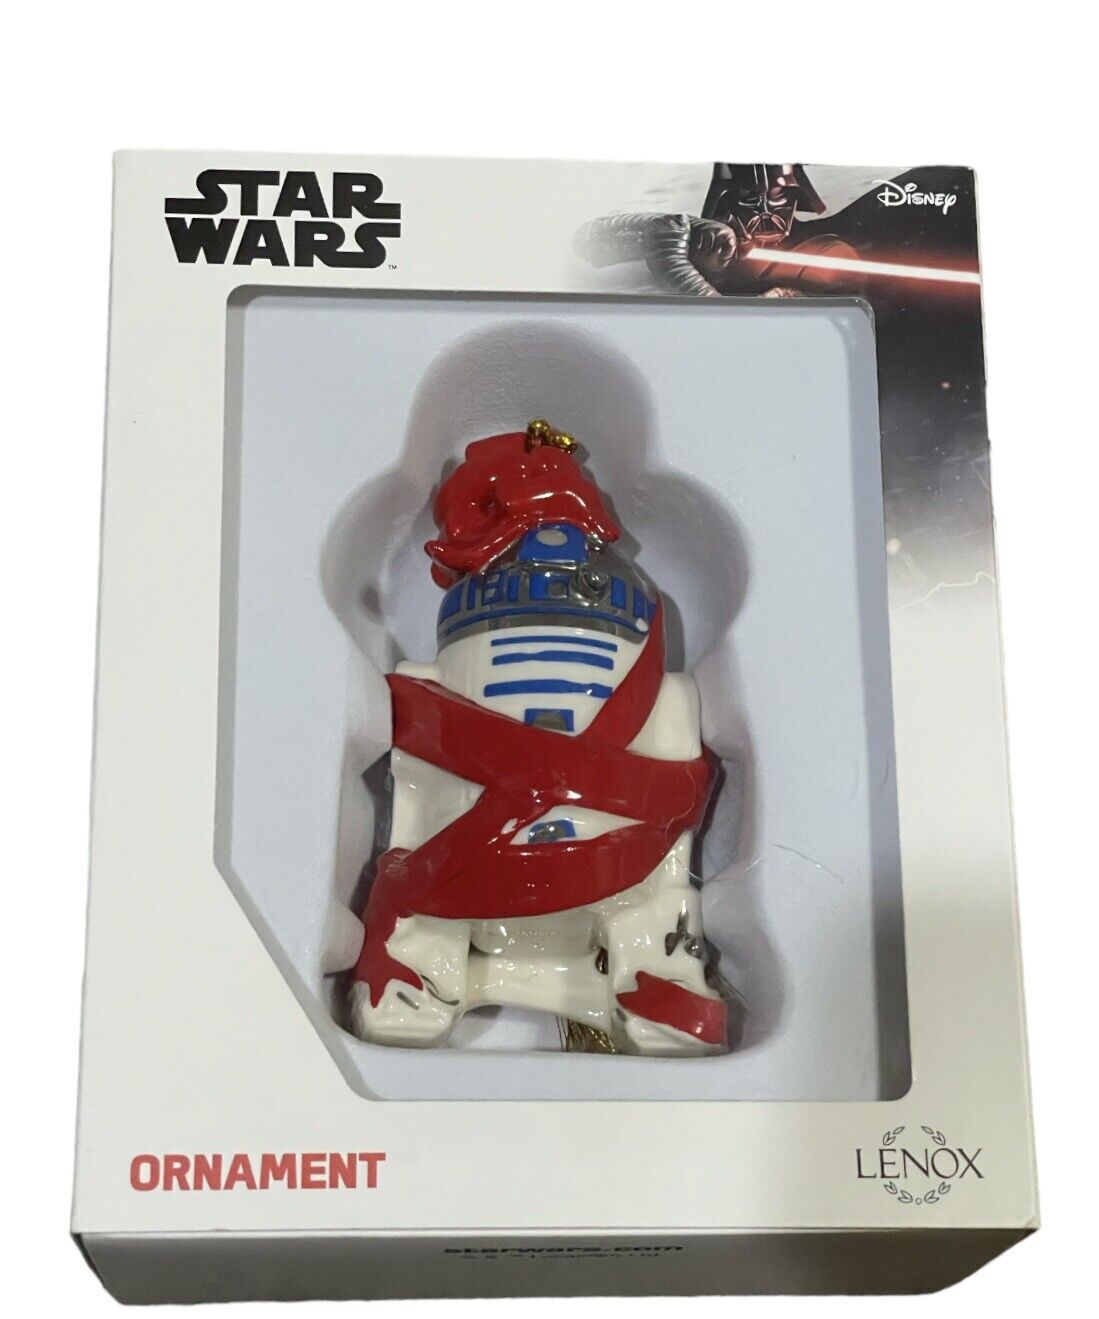 LENOX R2-D2 Star Wars 2022 Christmas Ornament 894191 - BRAND NEW IN BOX